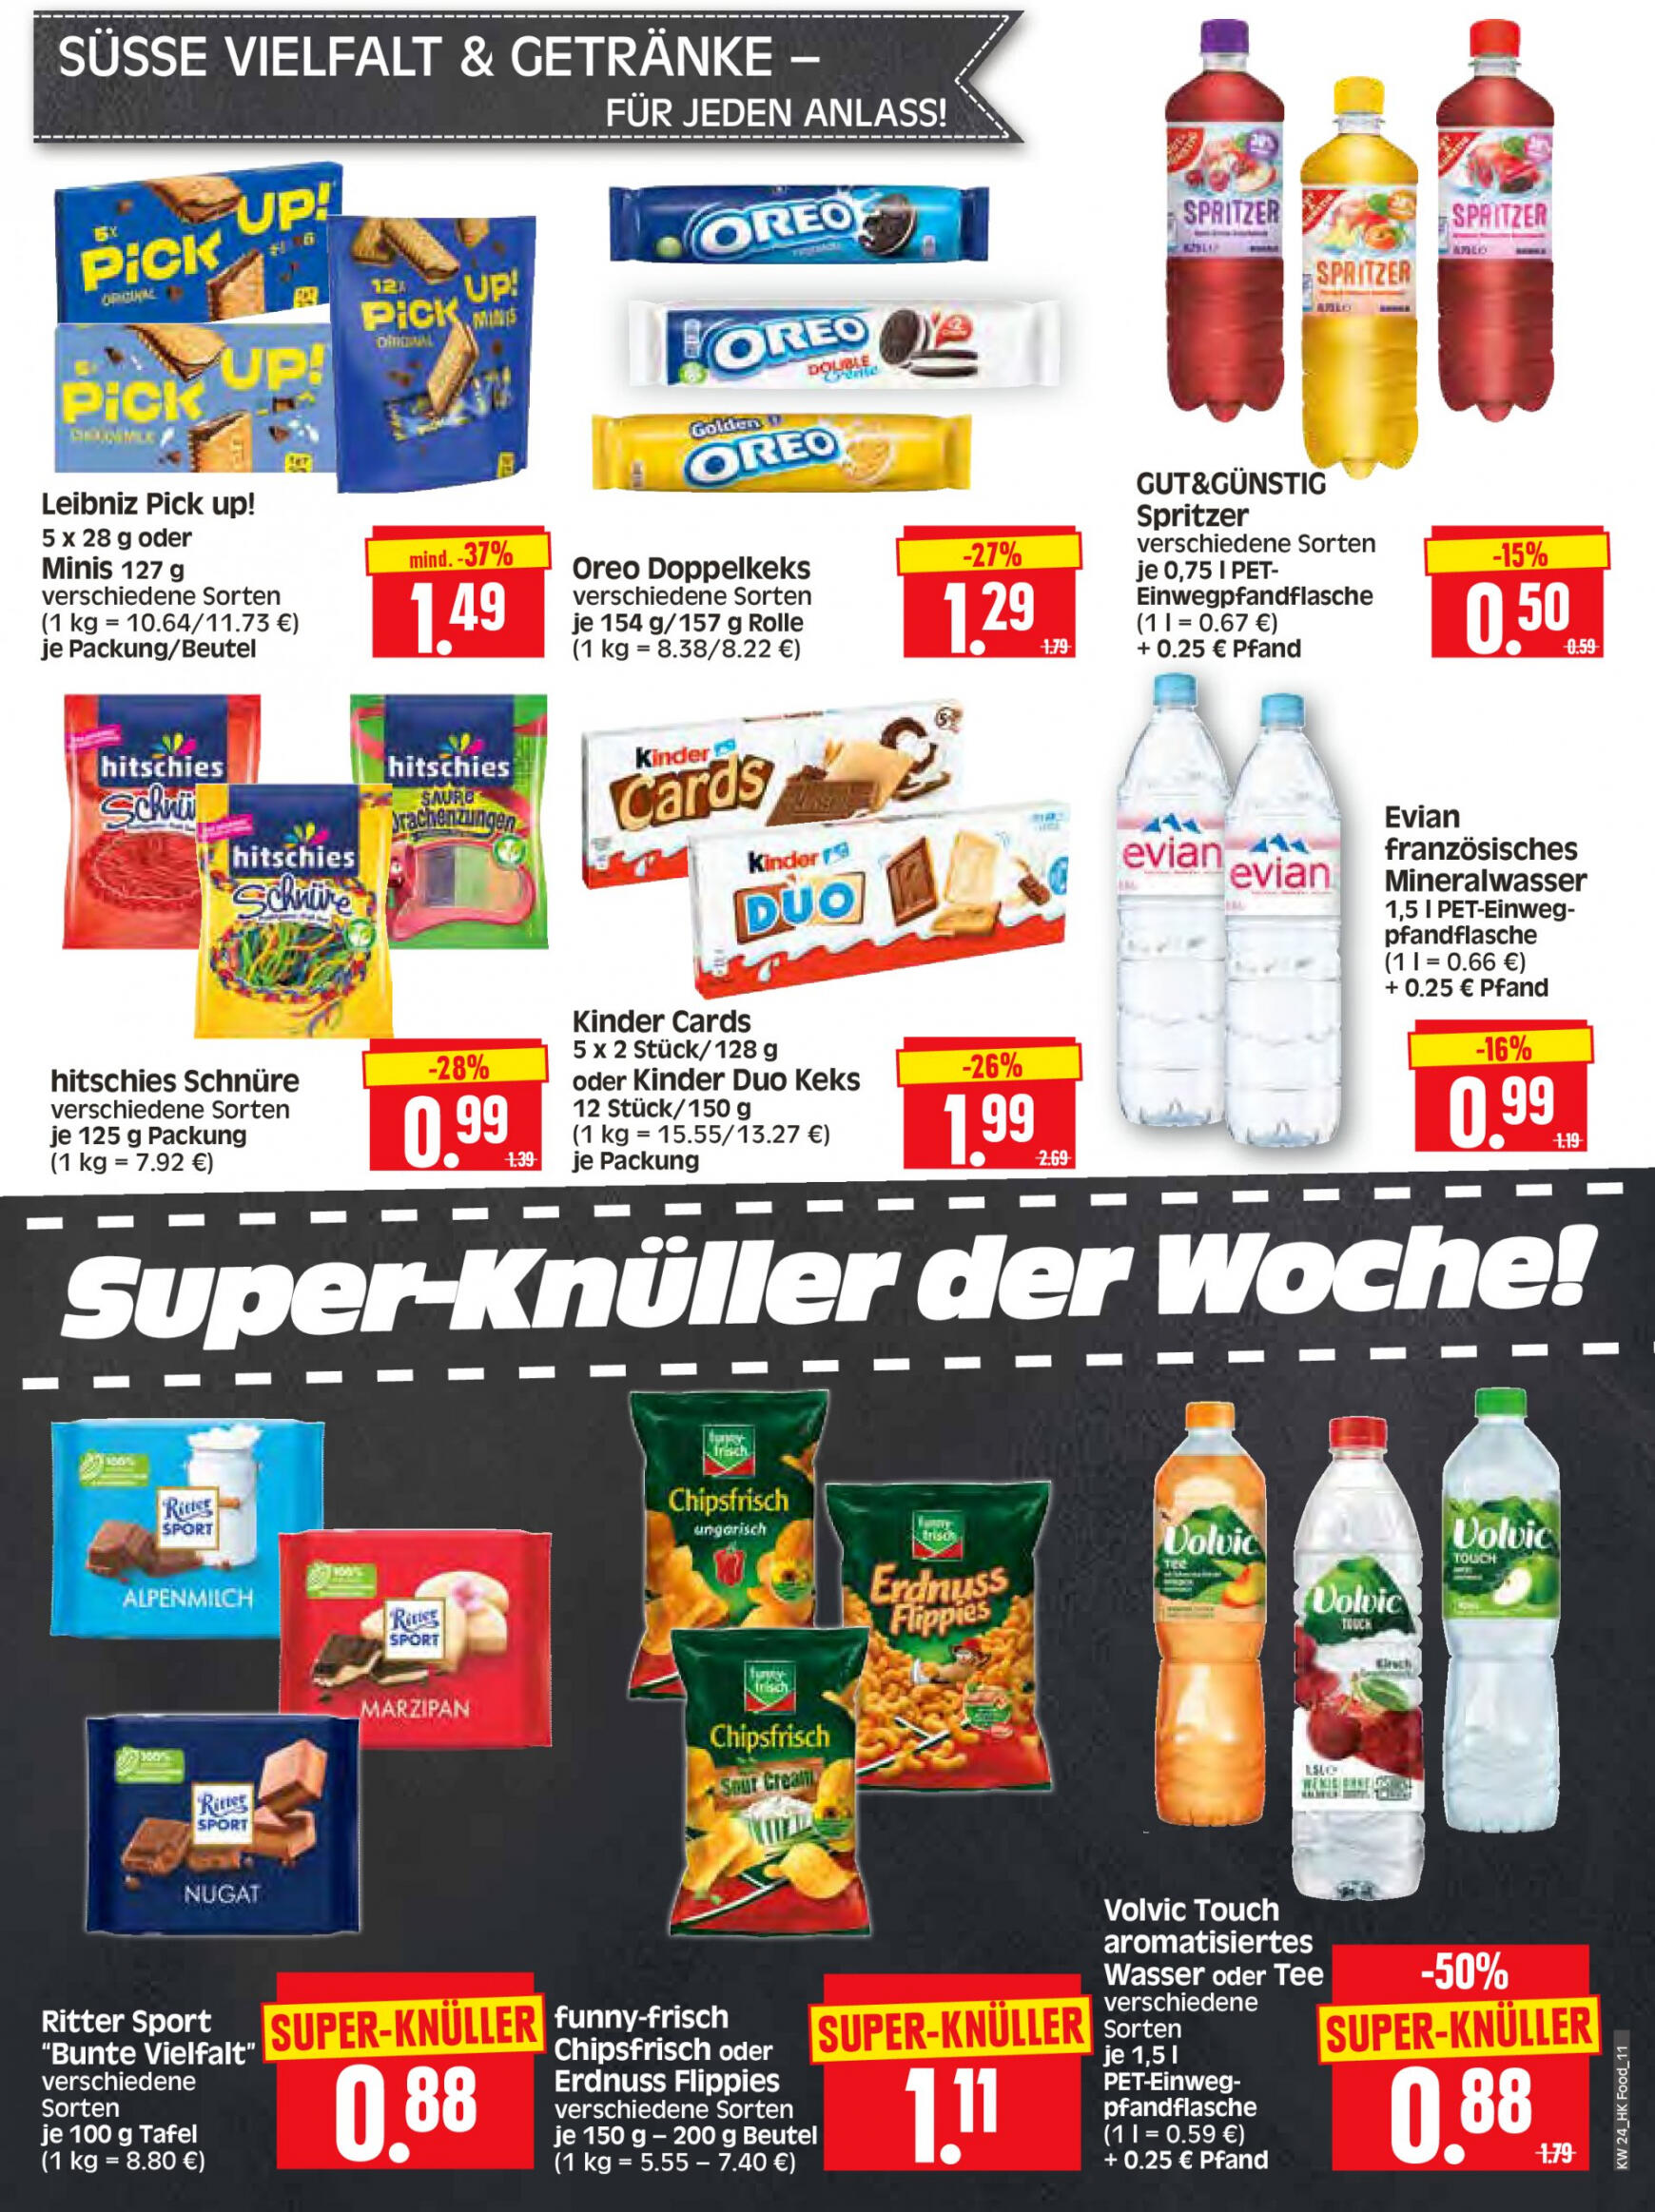 herkules - Flyer Herkules - Lebensmittel aktuell 10.06. - 15.06. - page: 11